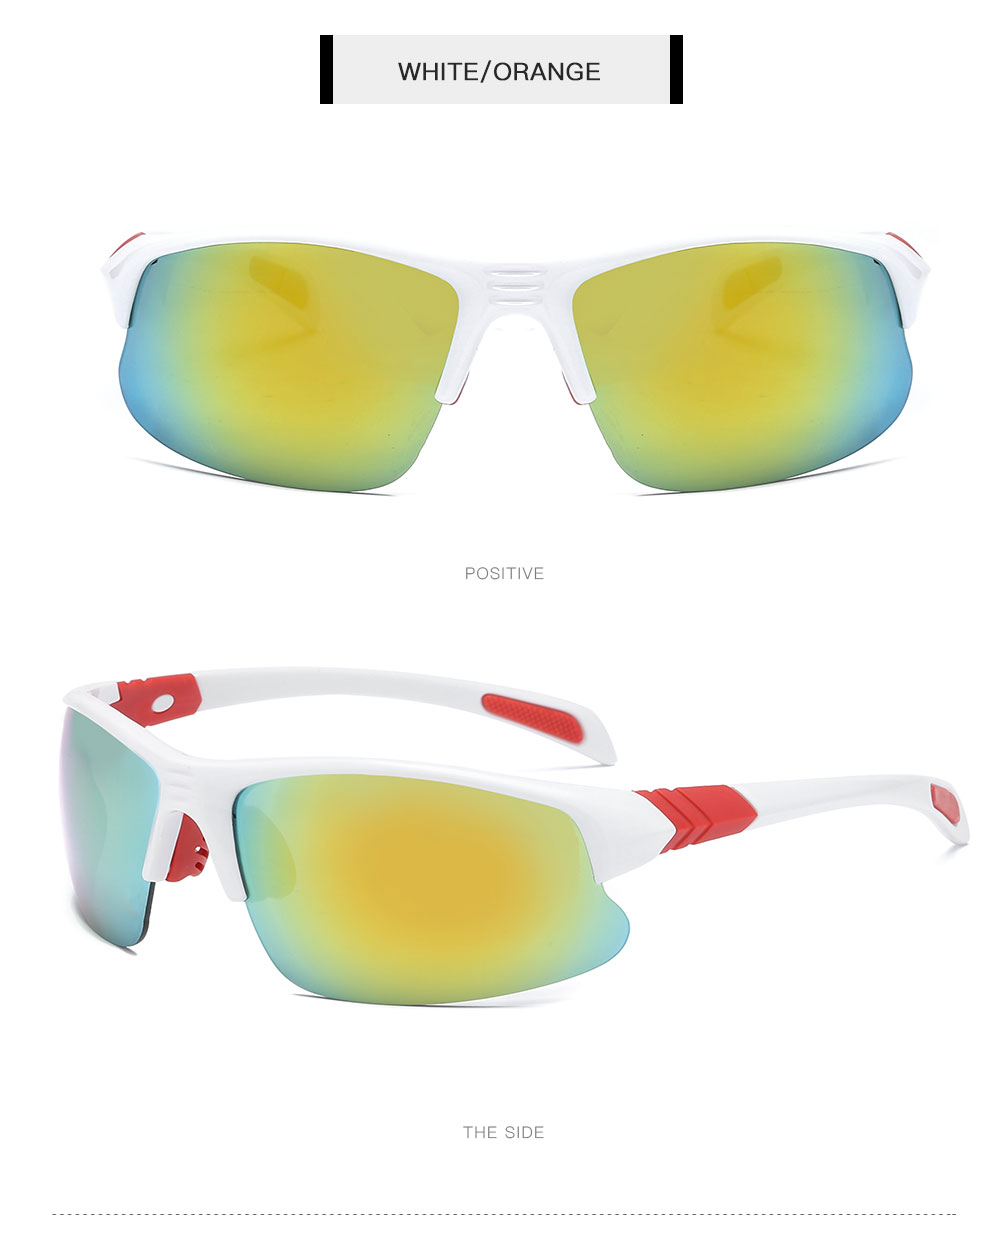 Sport Sunglasses Manufacturers - Cycling Sunglasses - Bike